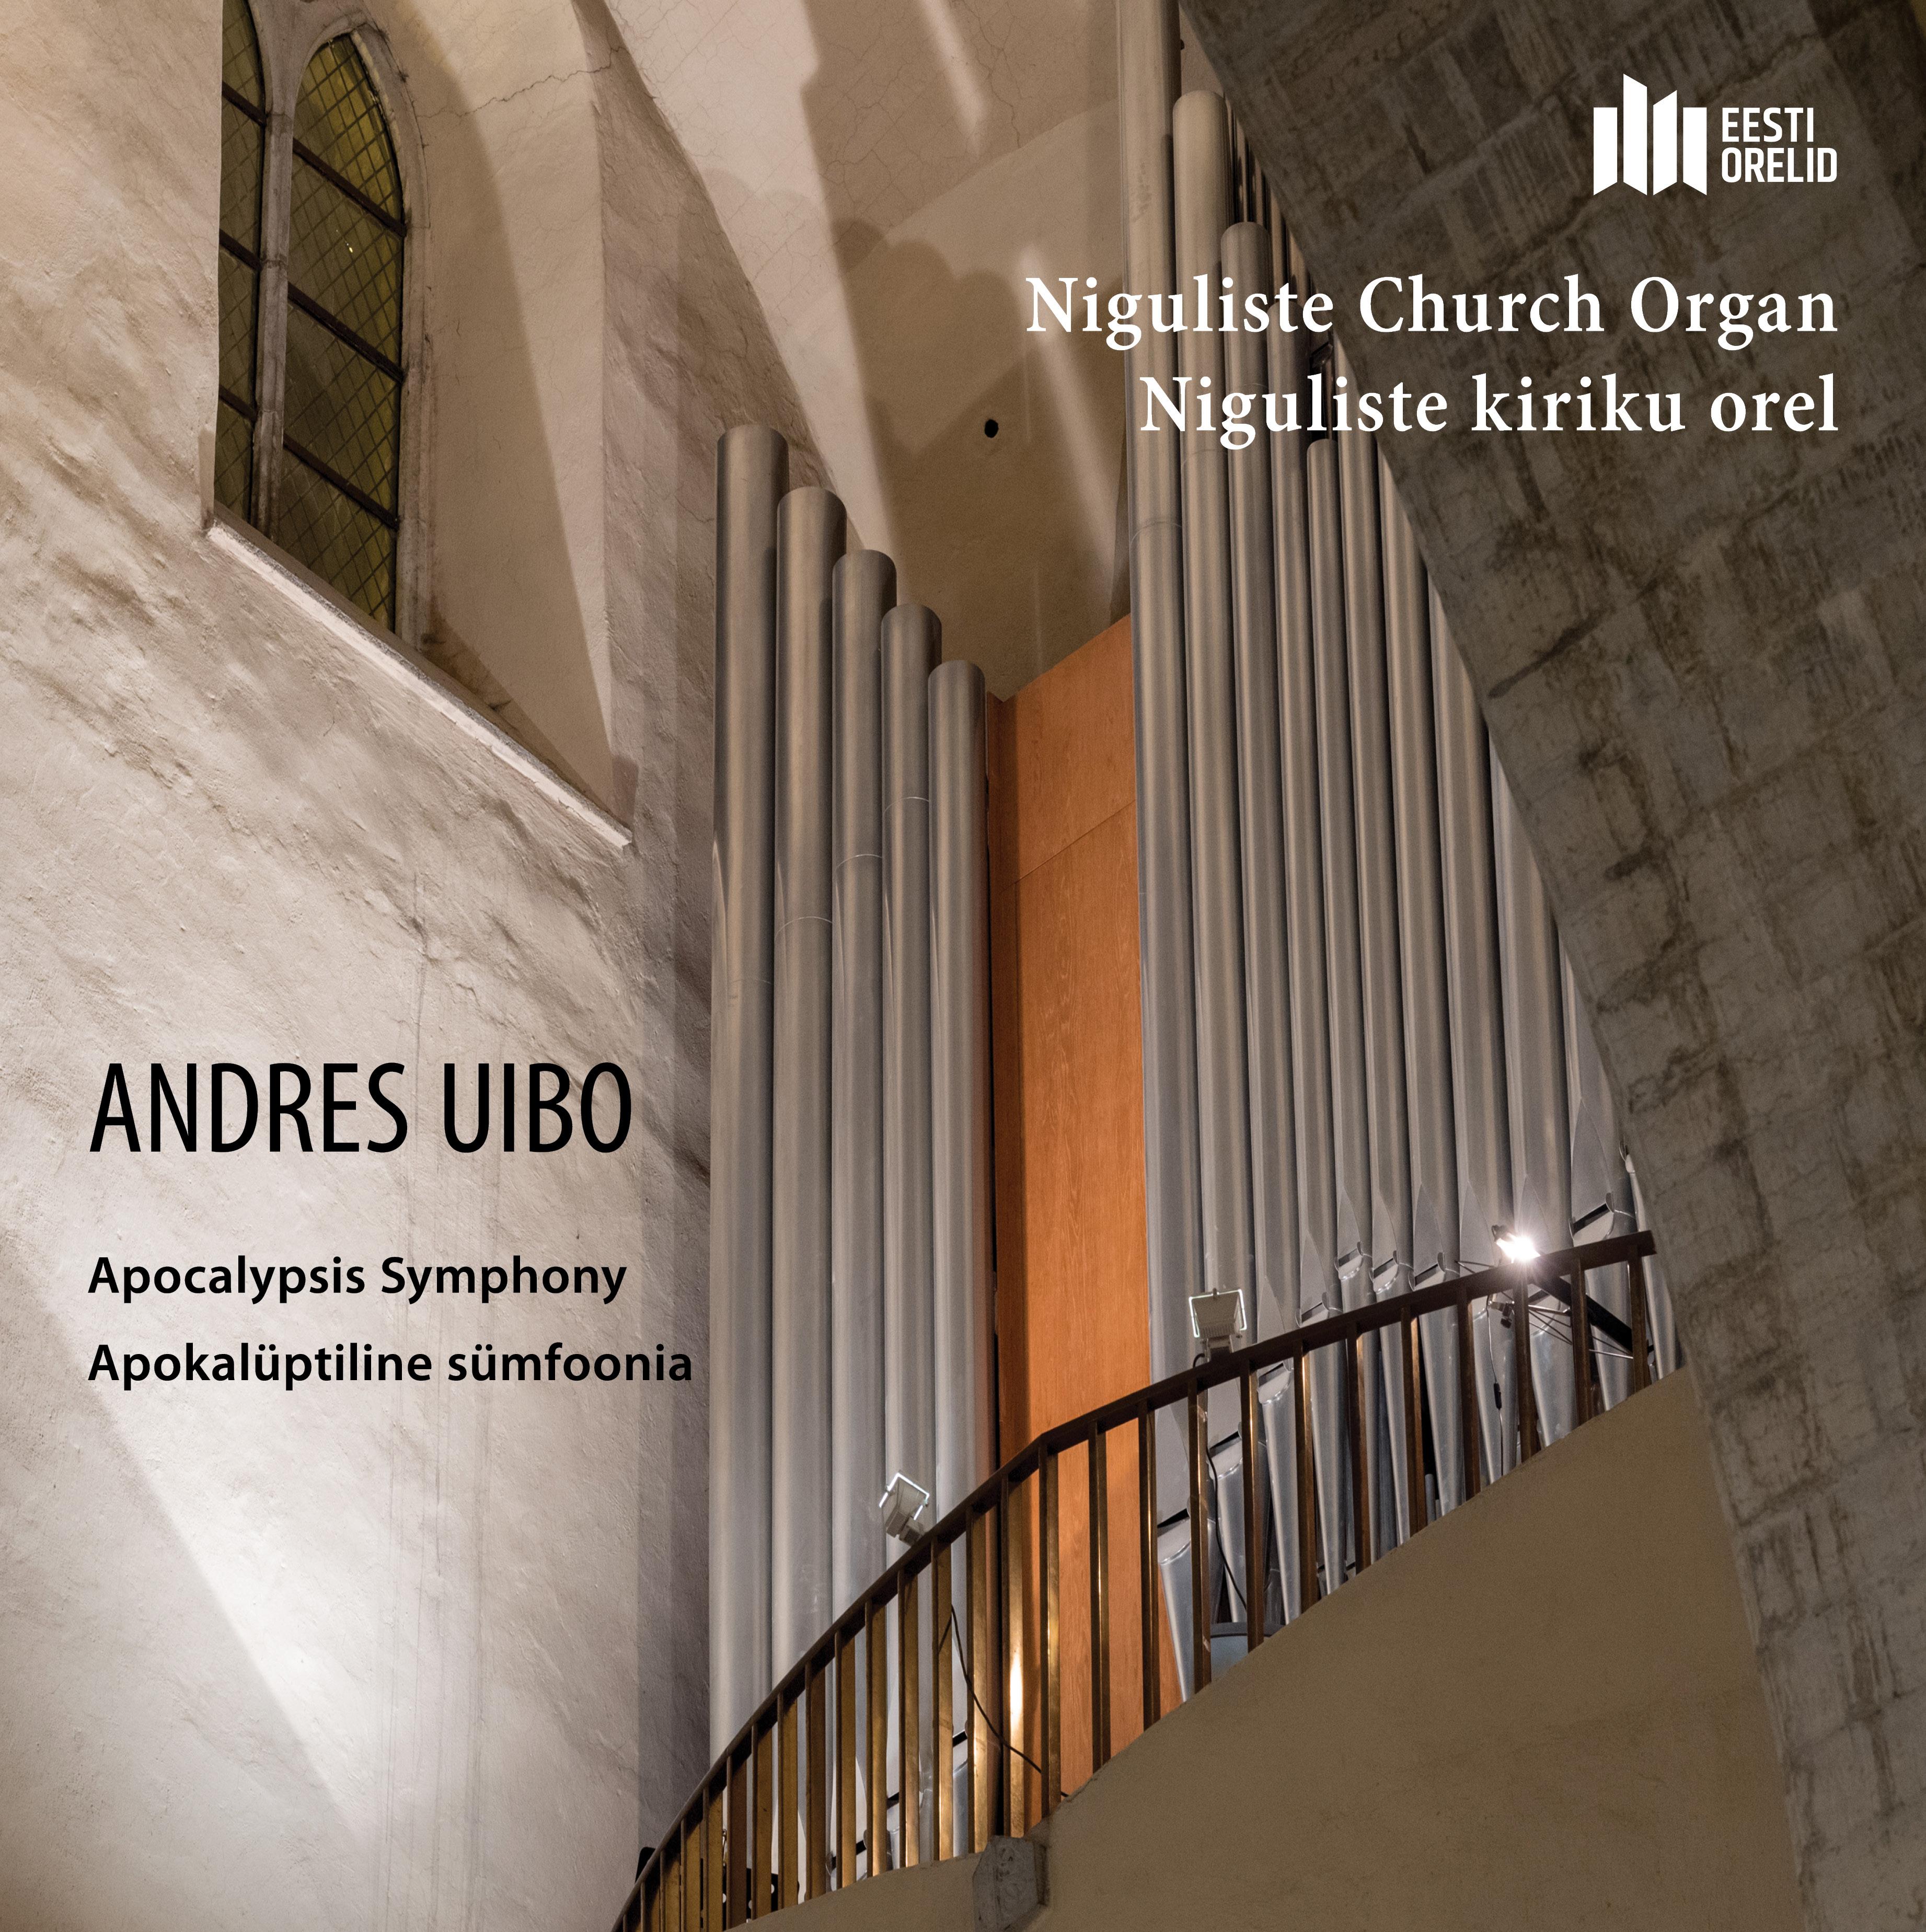 Andres Uibo - Niguliste Kiriku Orel LP